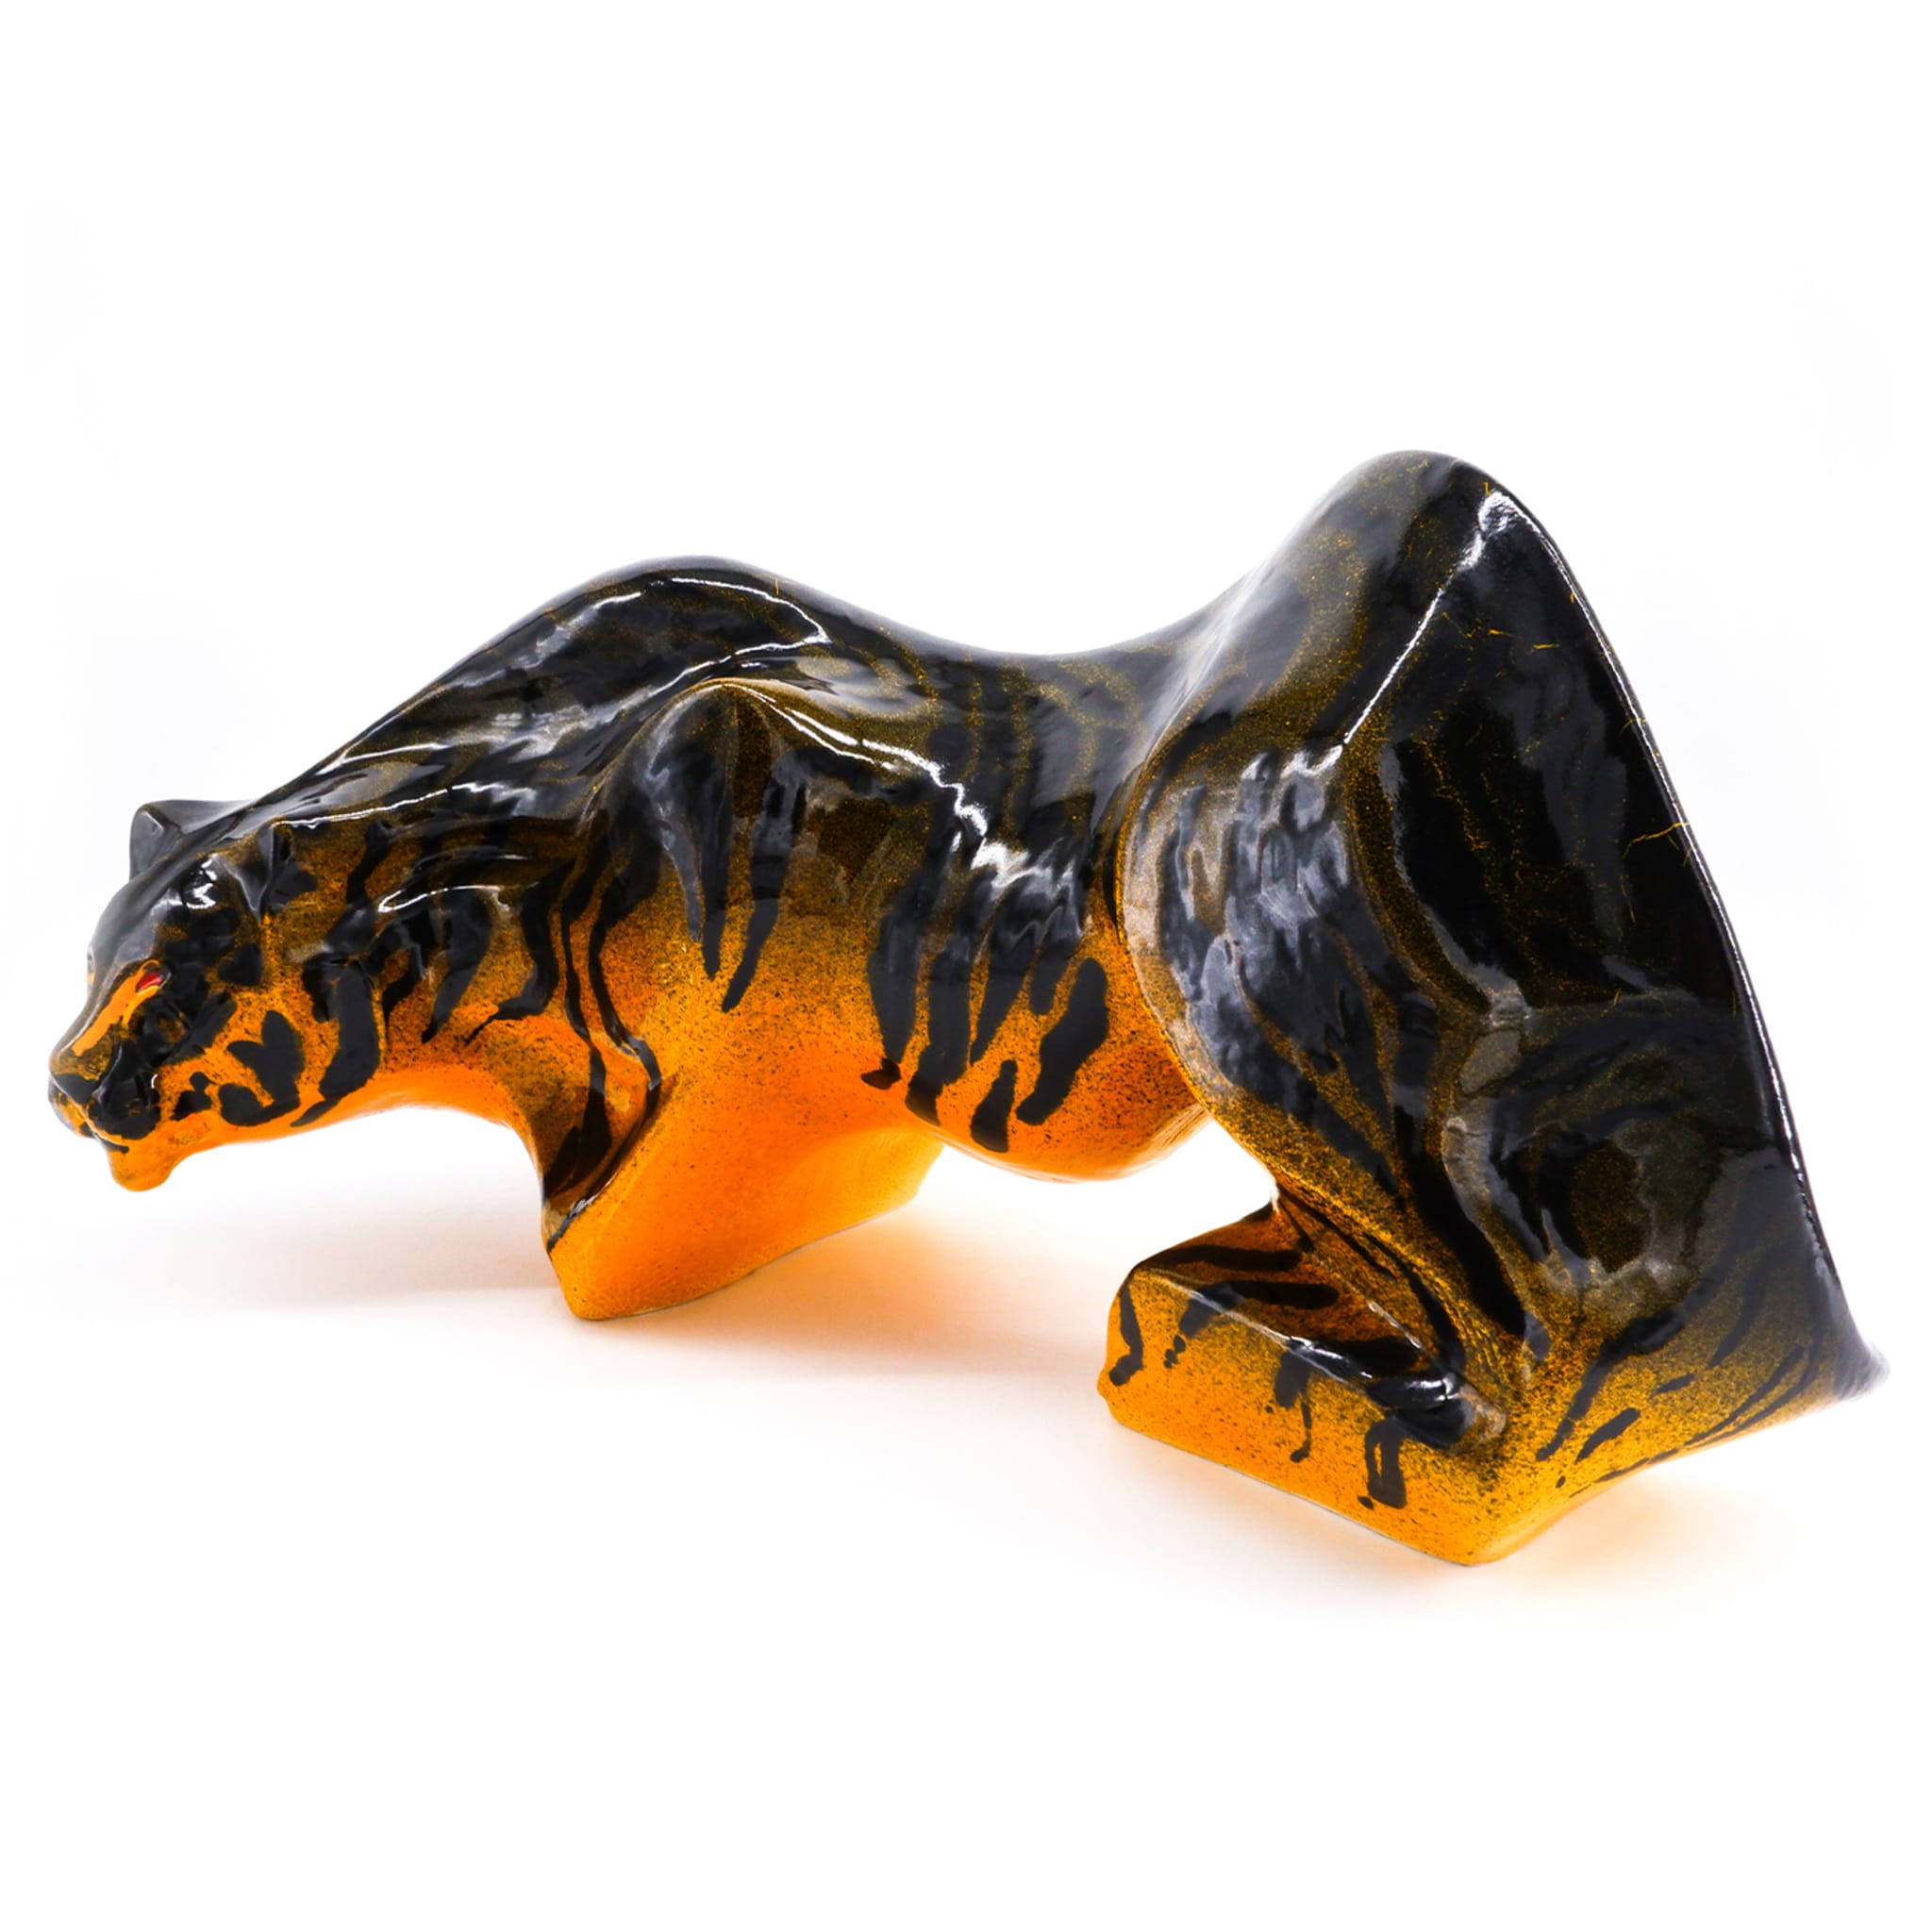 Tora black and orange sculpture - Alternative view 1